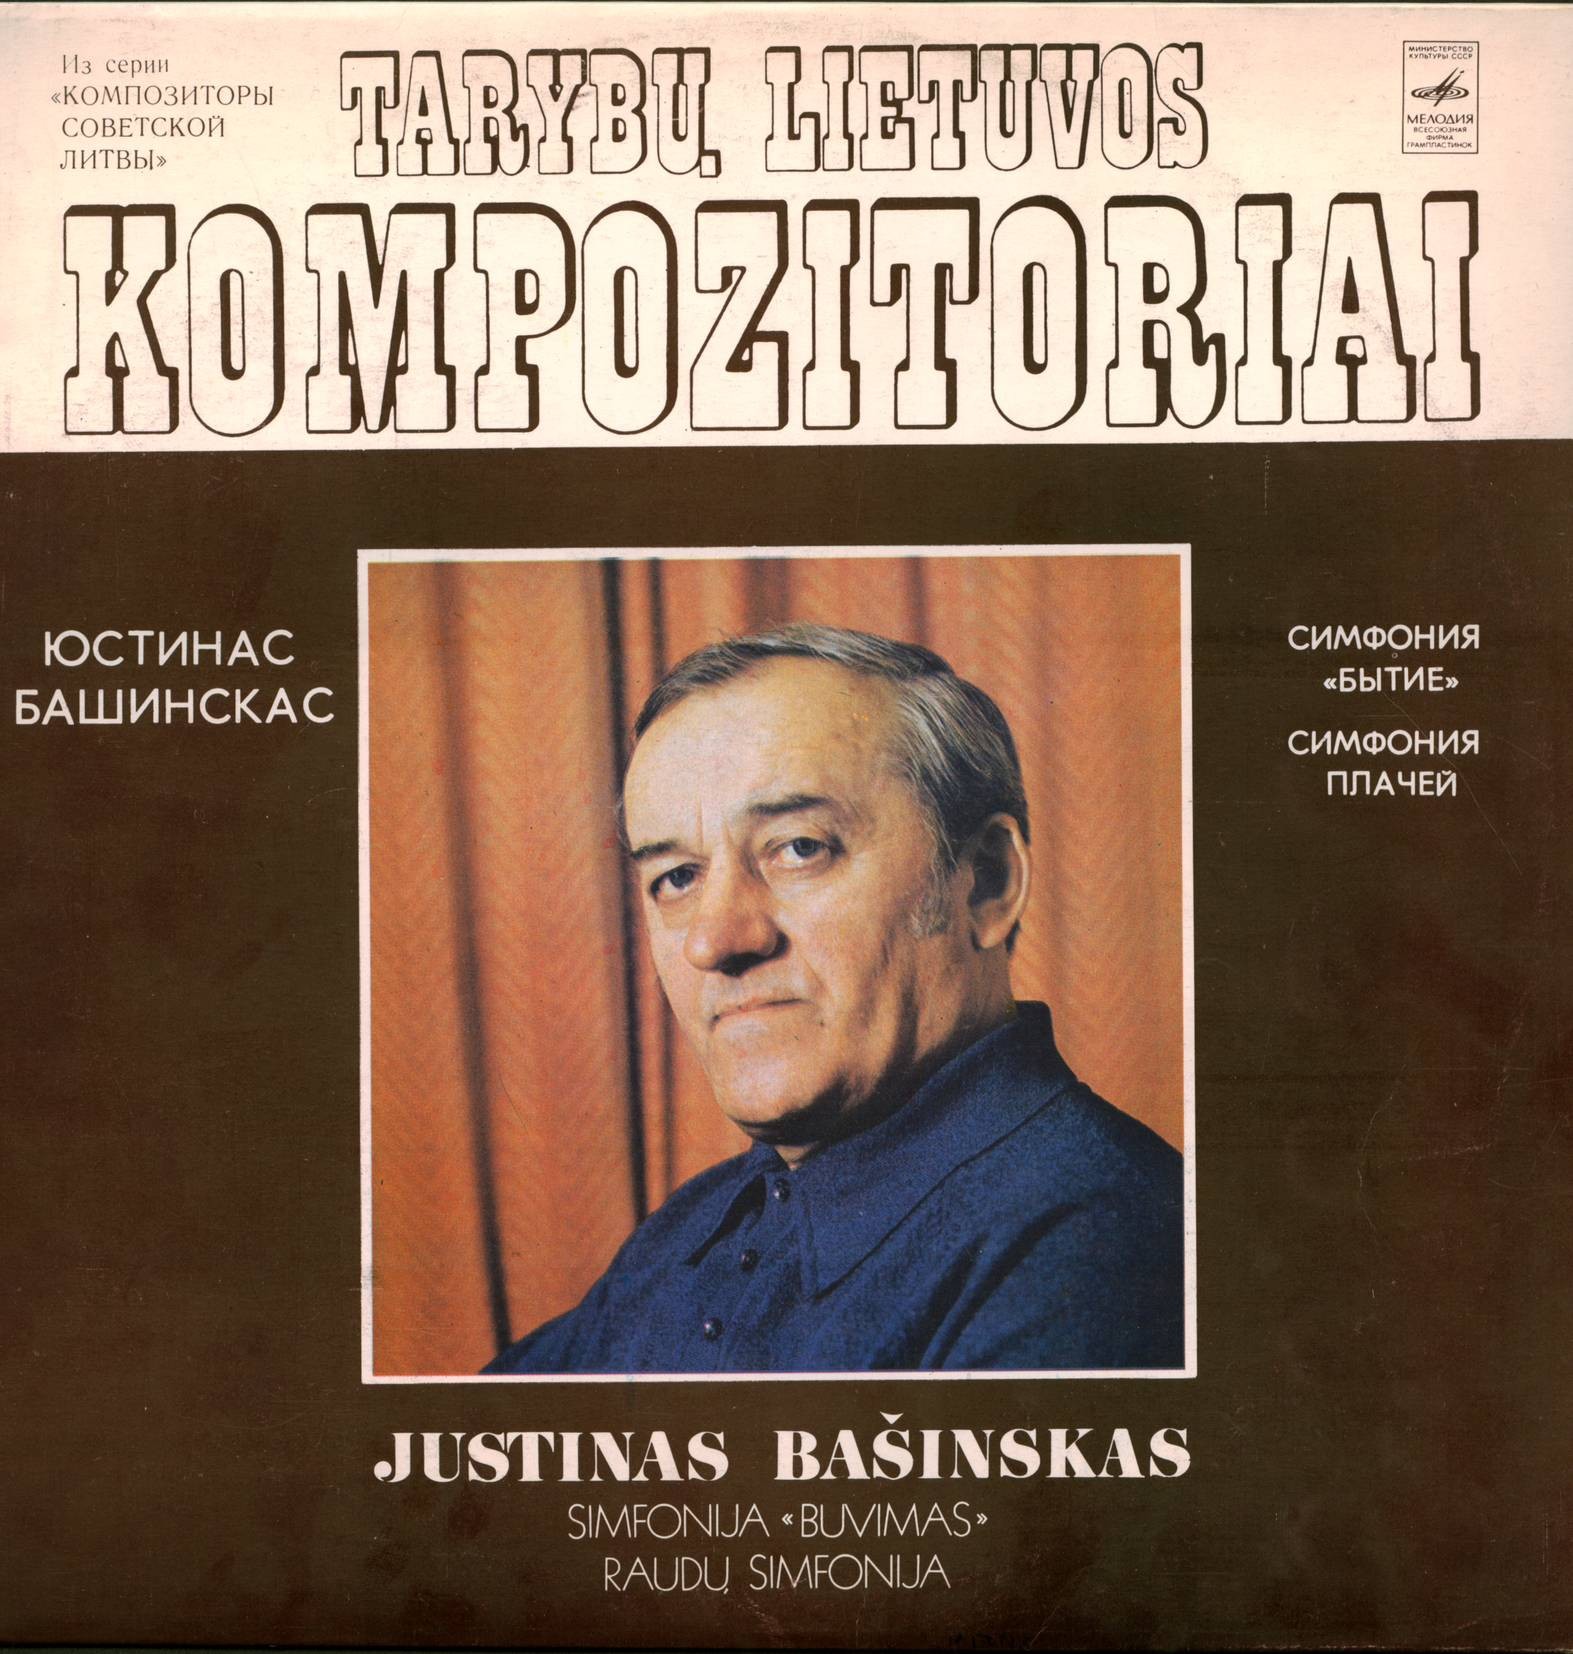 Юстинас БАШИНСКАС (1923)